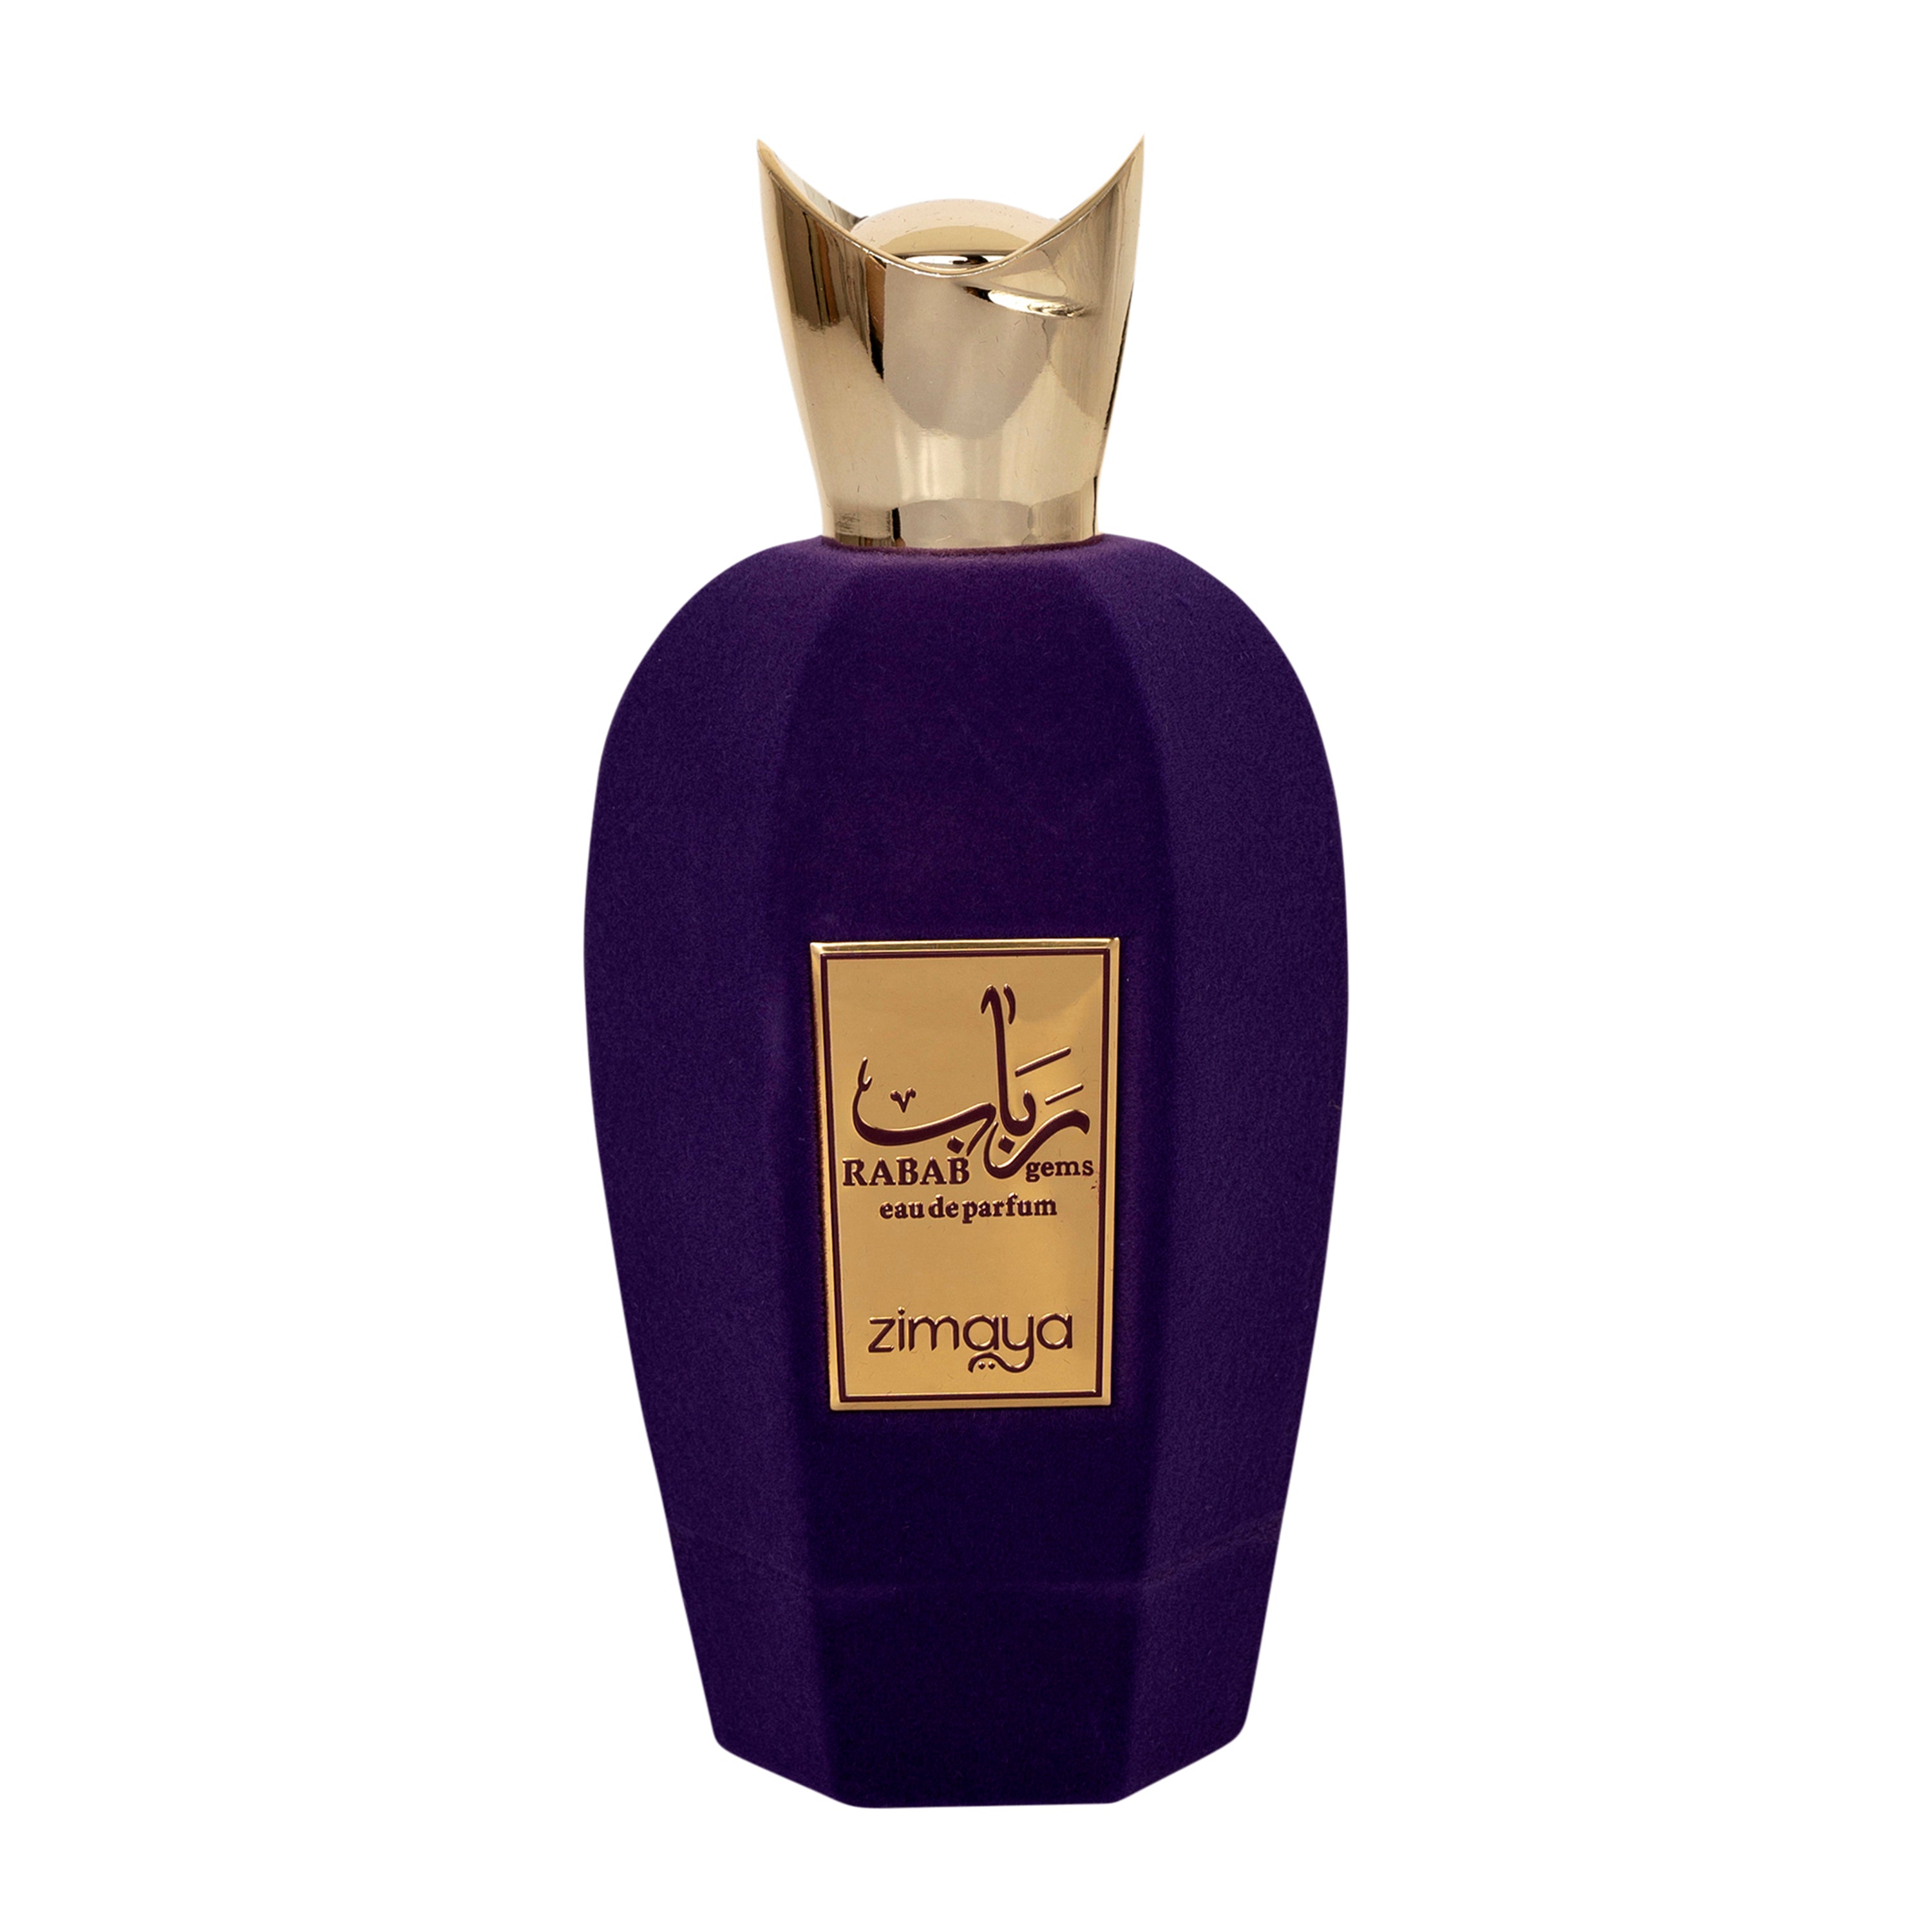 Products Zimaya Rabab Gems Eau De Parfum 100ml